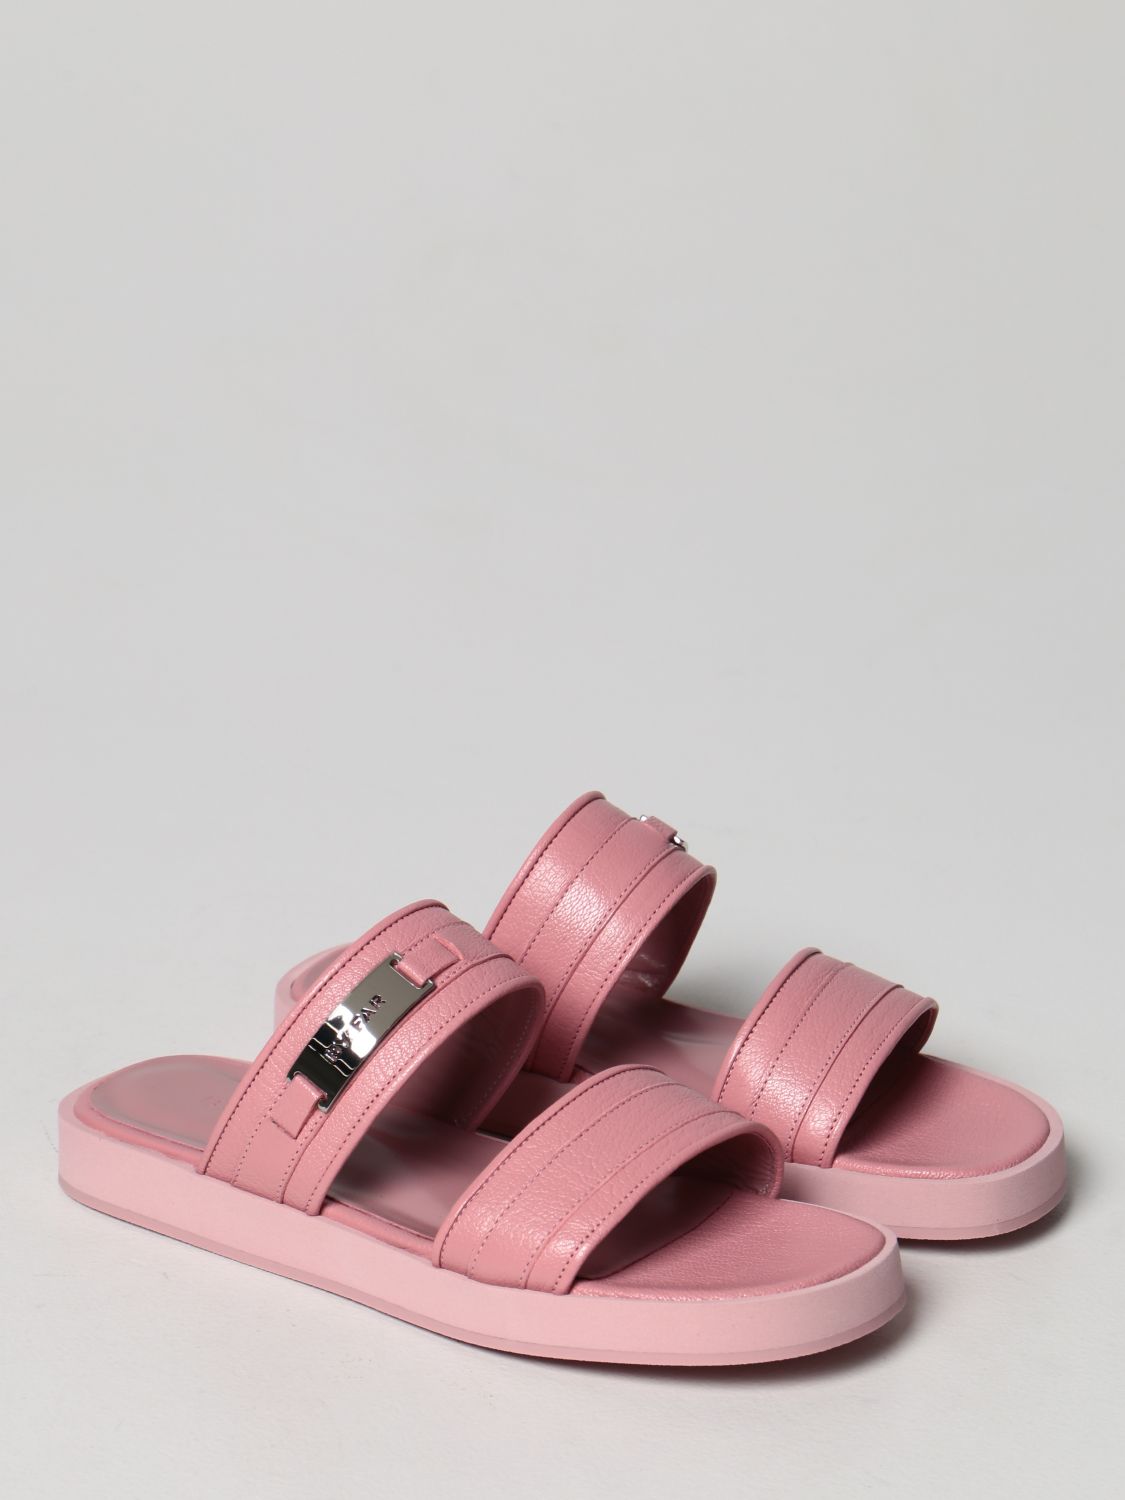 BY FAR Gummi Andere materialien sandalen in Pink Damen Schuhe Flache Schuhe Flache Sandalen 